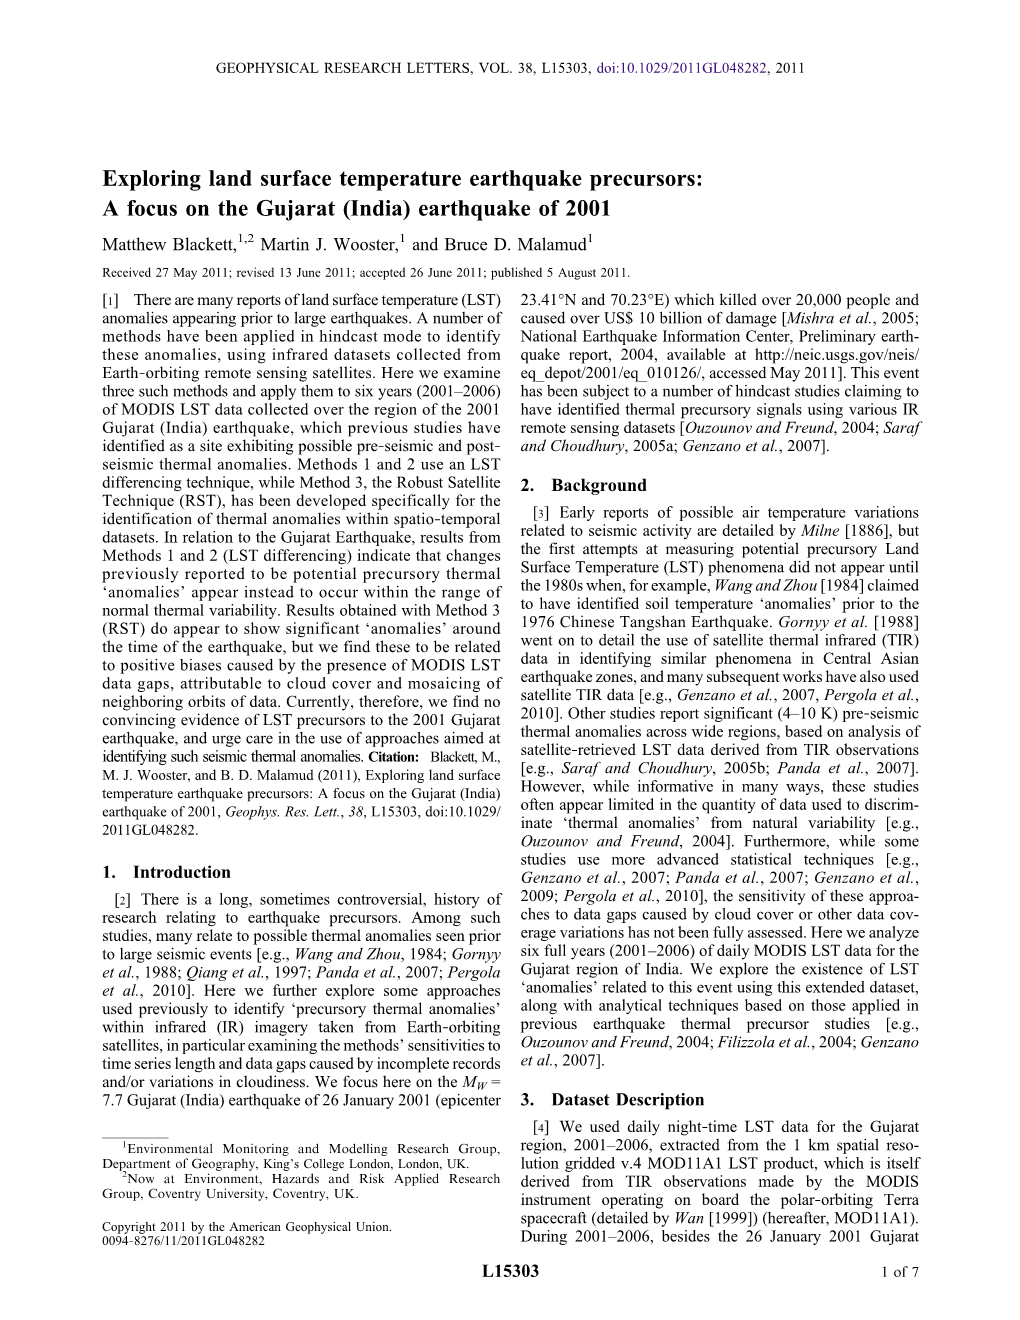 Exploring Land Surface Temperature Earthquake Precursors: a Focus on the Gujarat (India) Earthquake of 2001 Matthew Blackett,1,2 Martin J